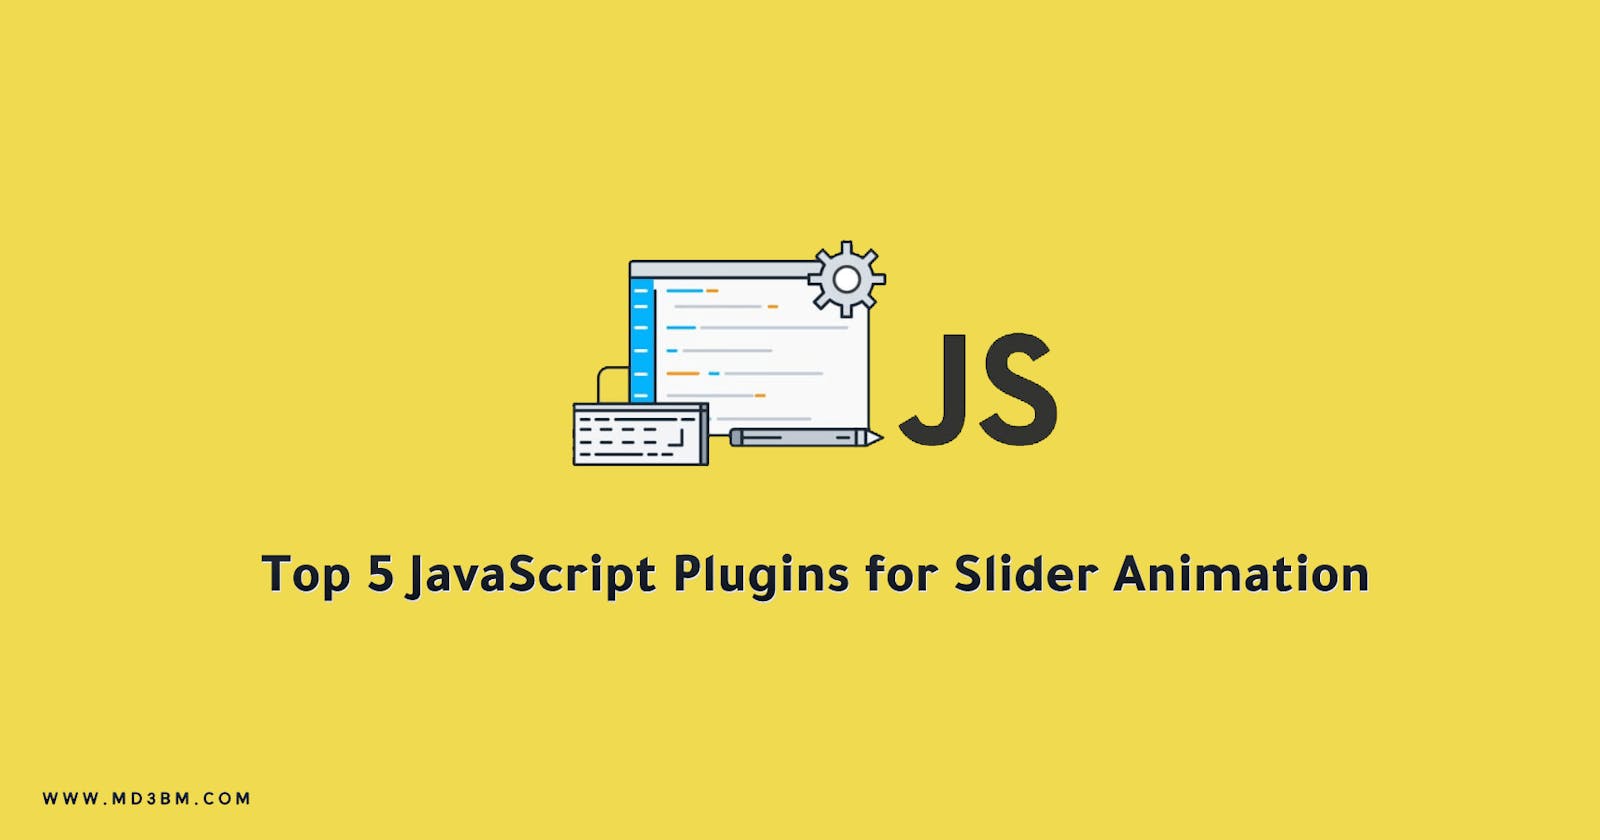 Top 5 JavaScript Plugins for Slider Animation